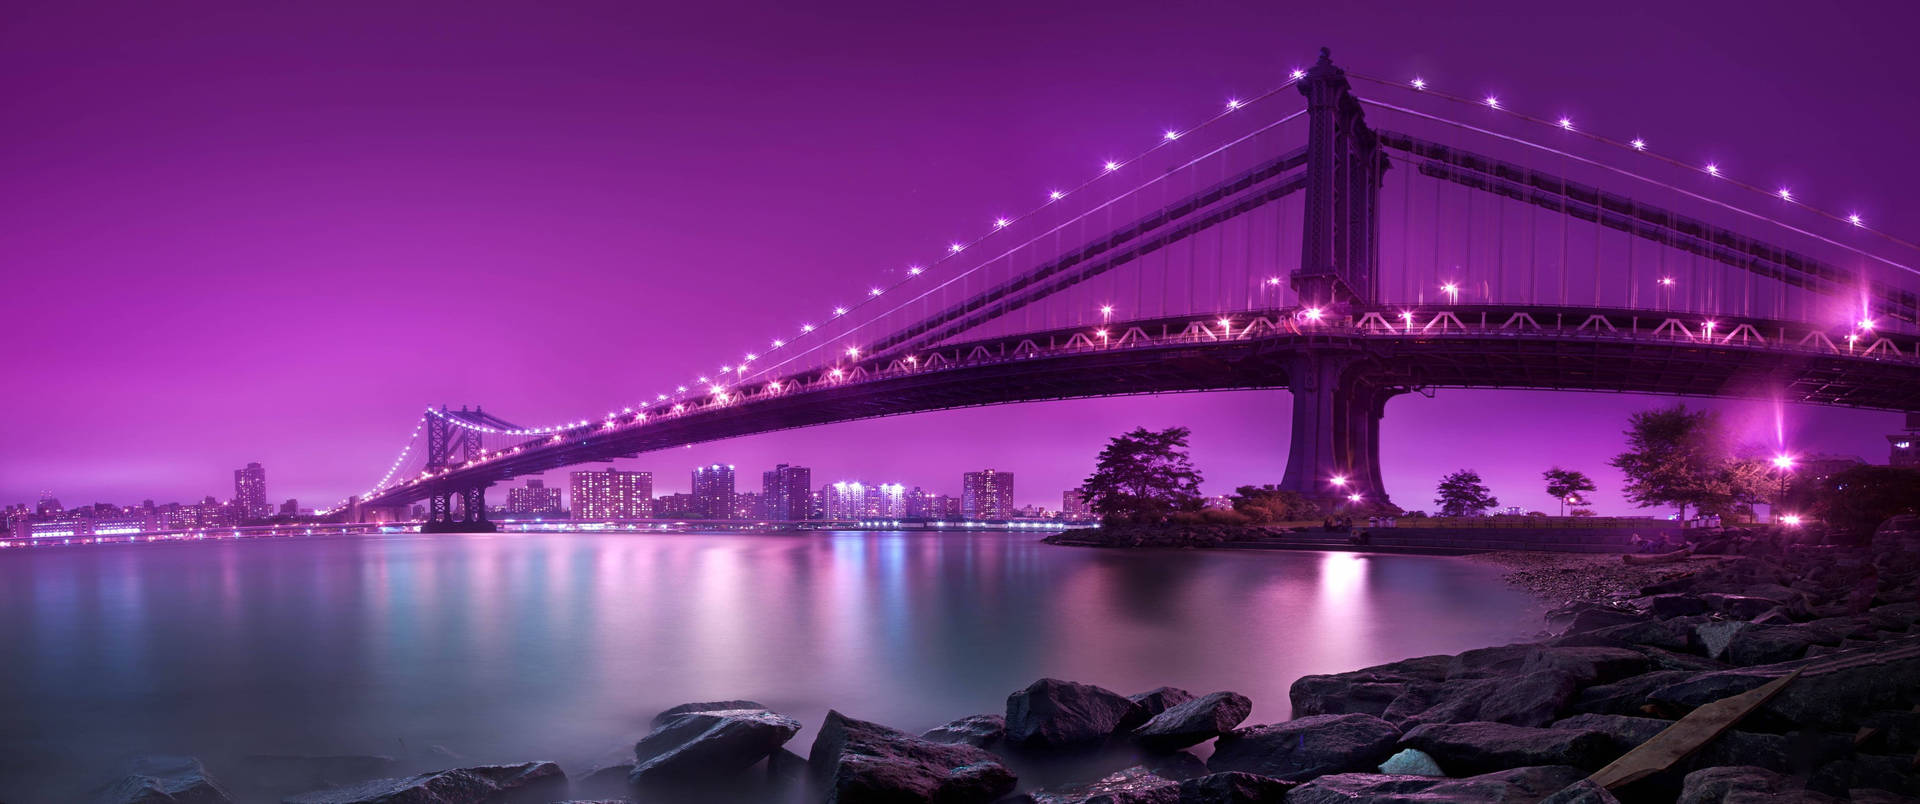 Breathtaking Ultra Wide 4k View Of A Purple Illuminated Bridge Background